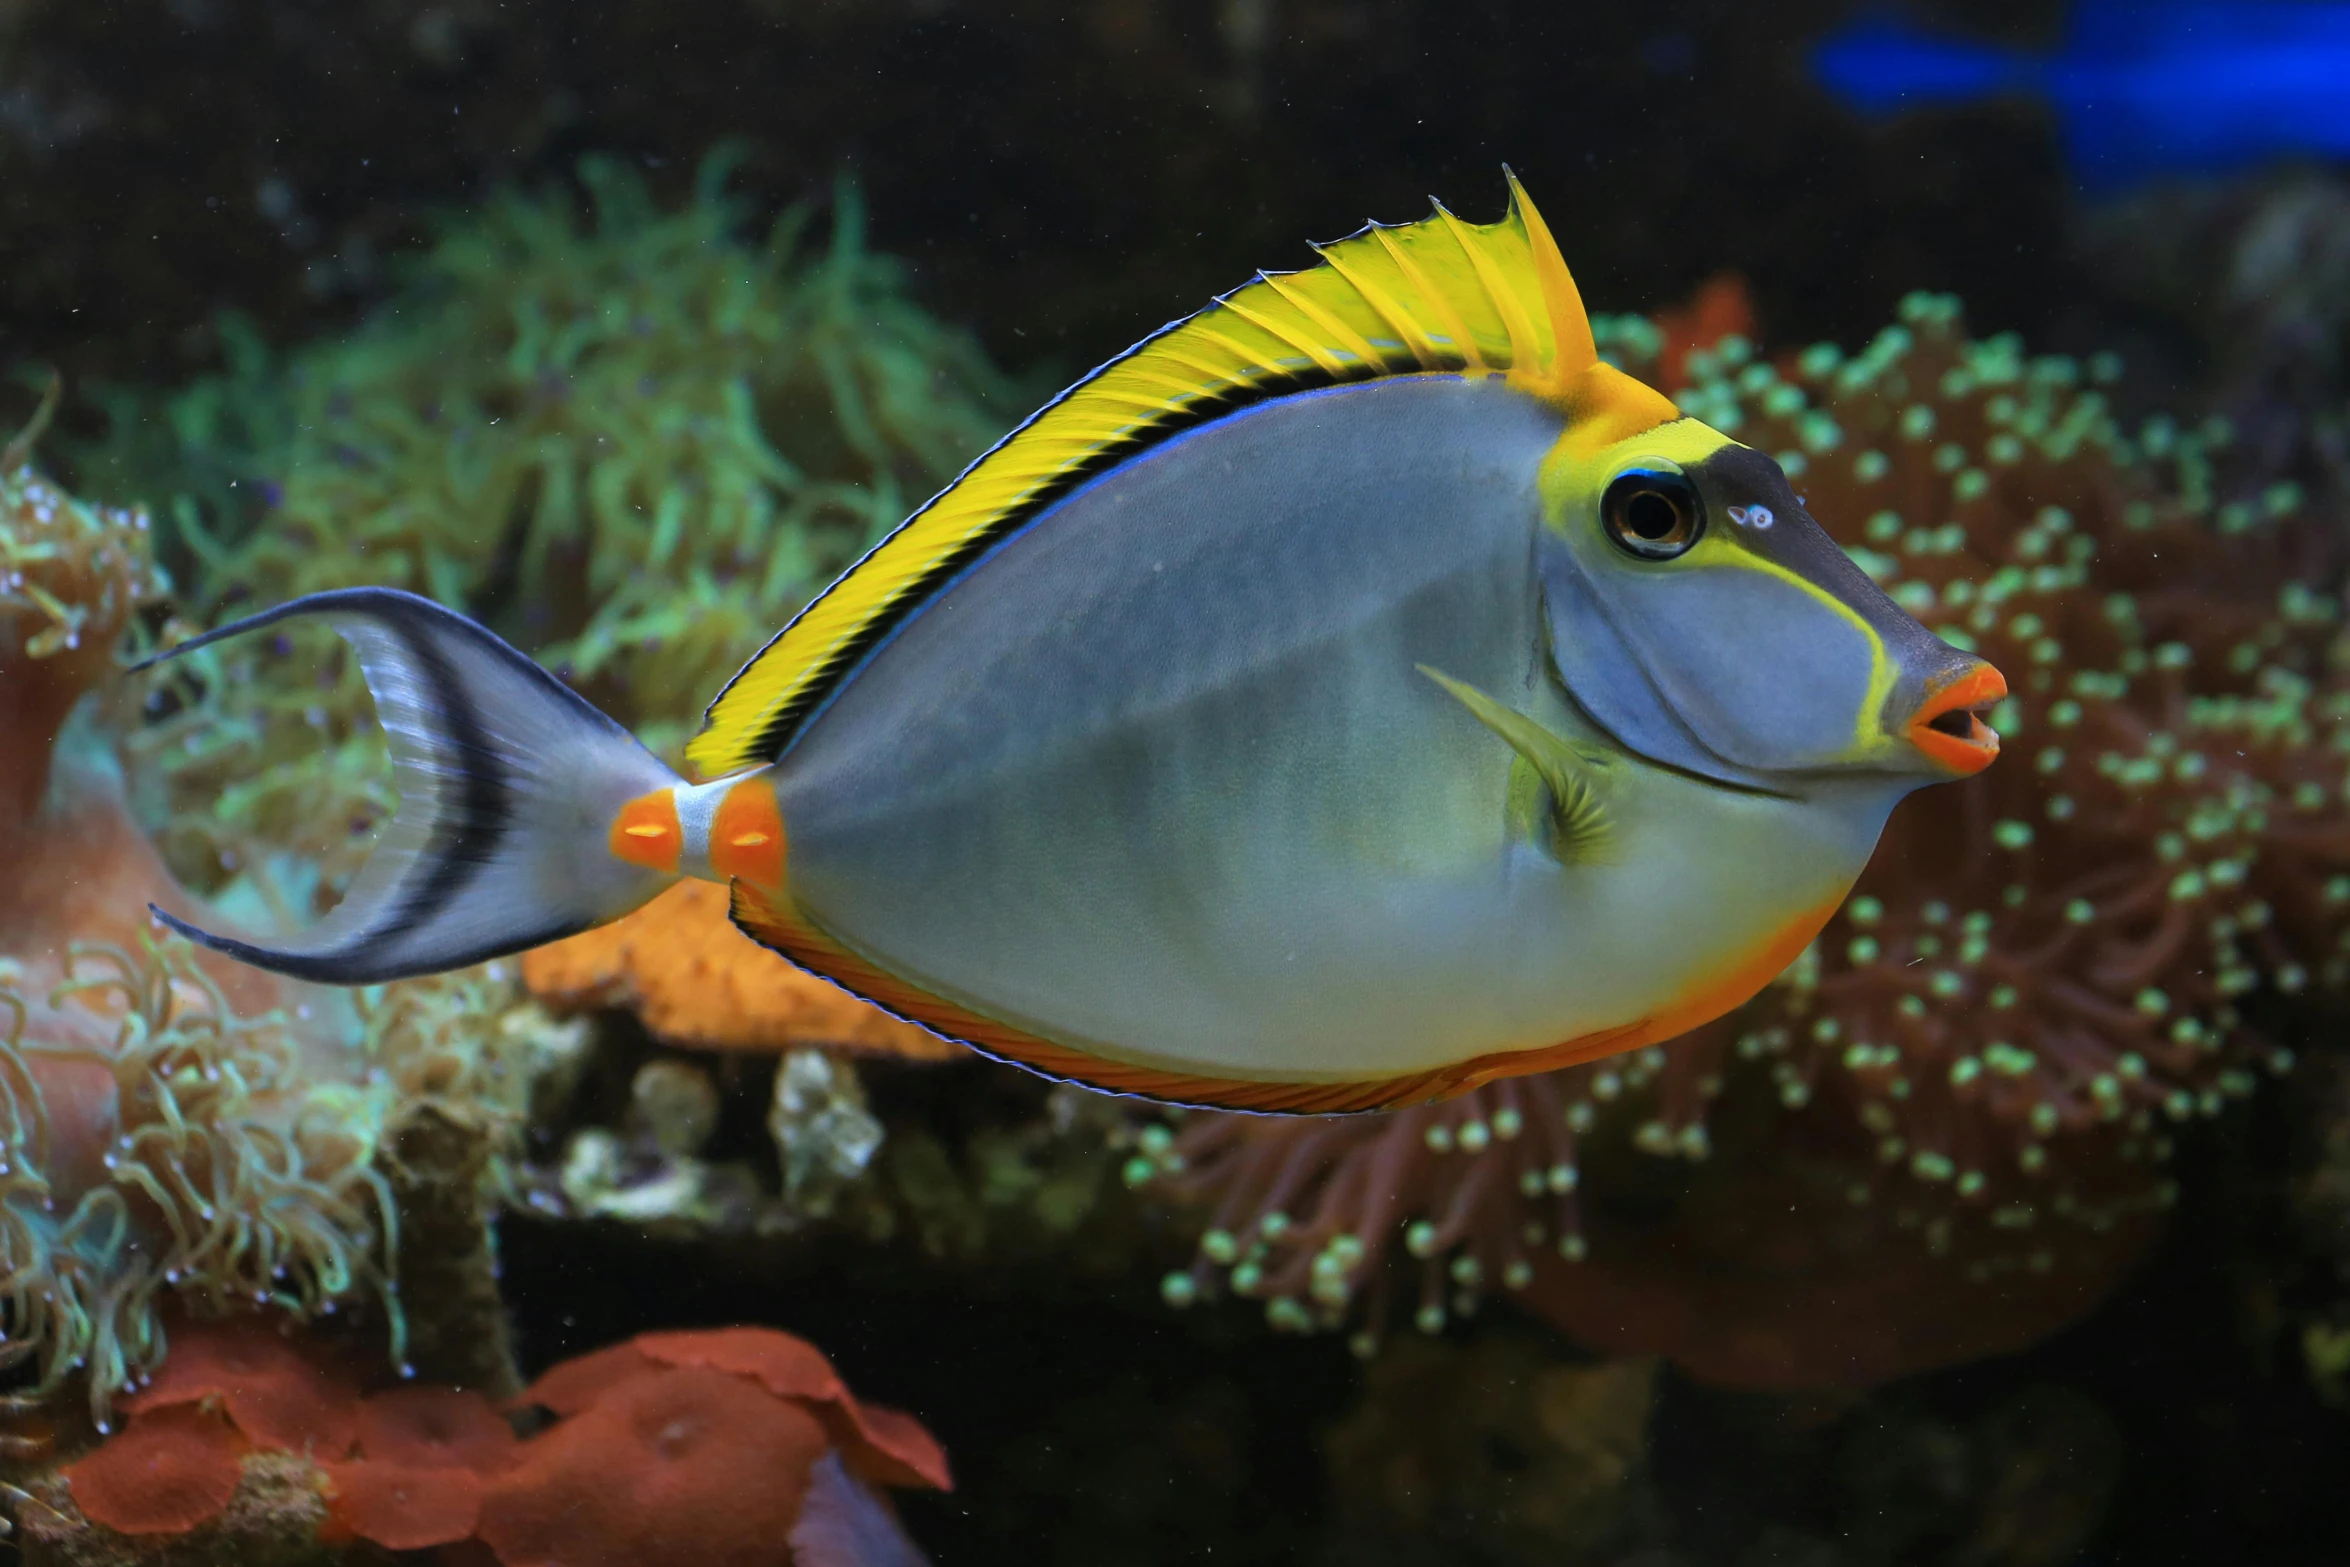 a close up of a fish in an aquarium, under the sea